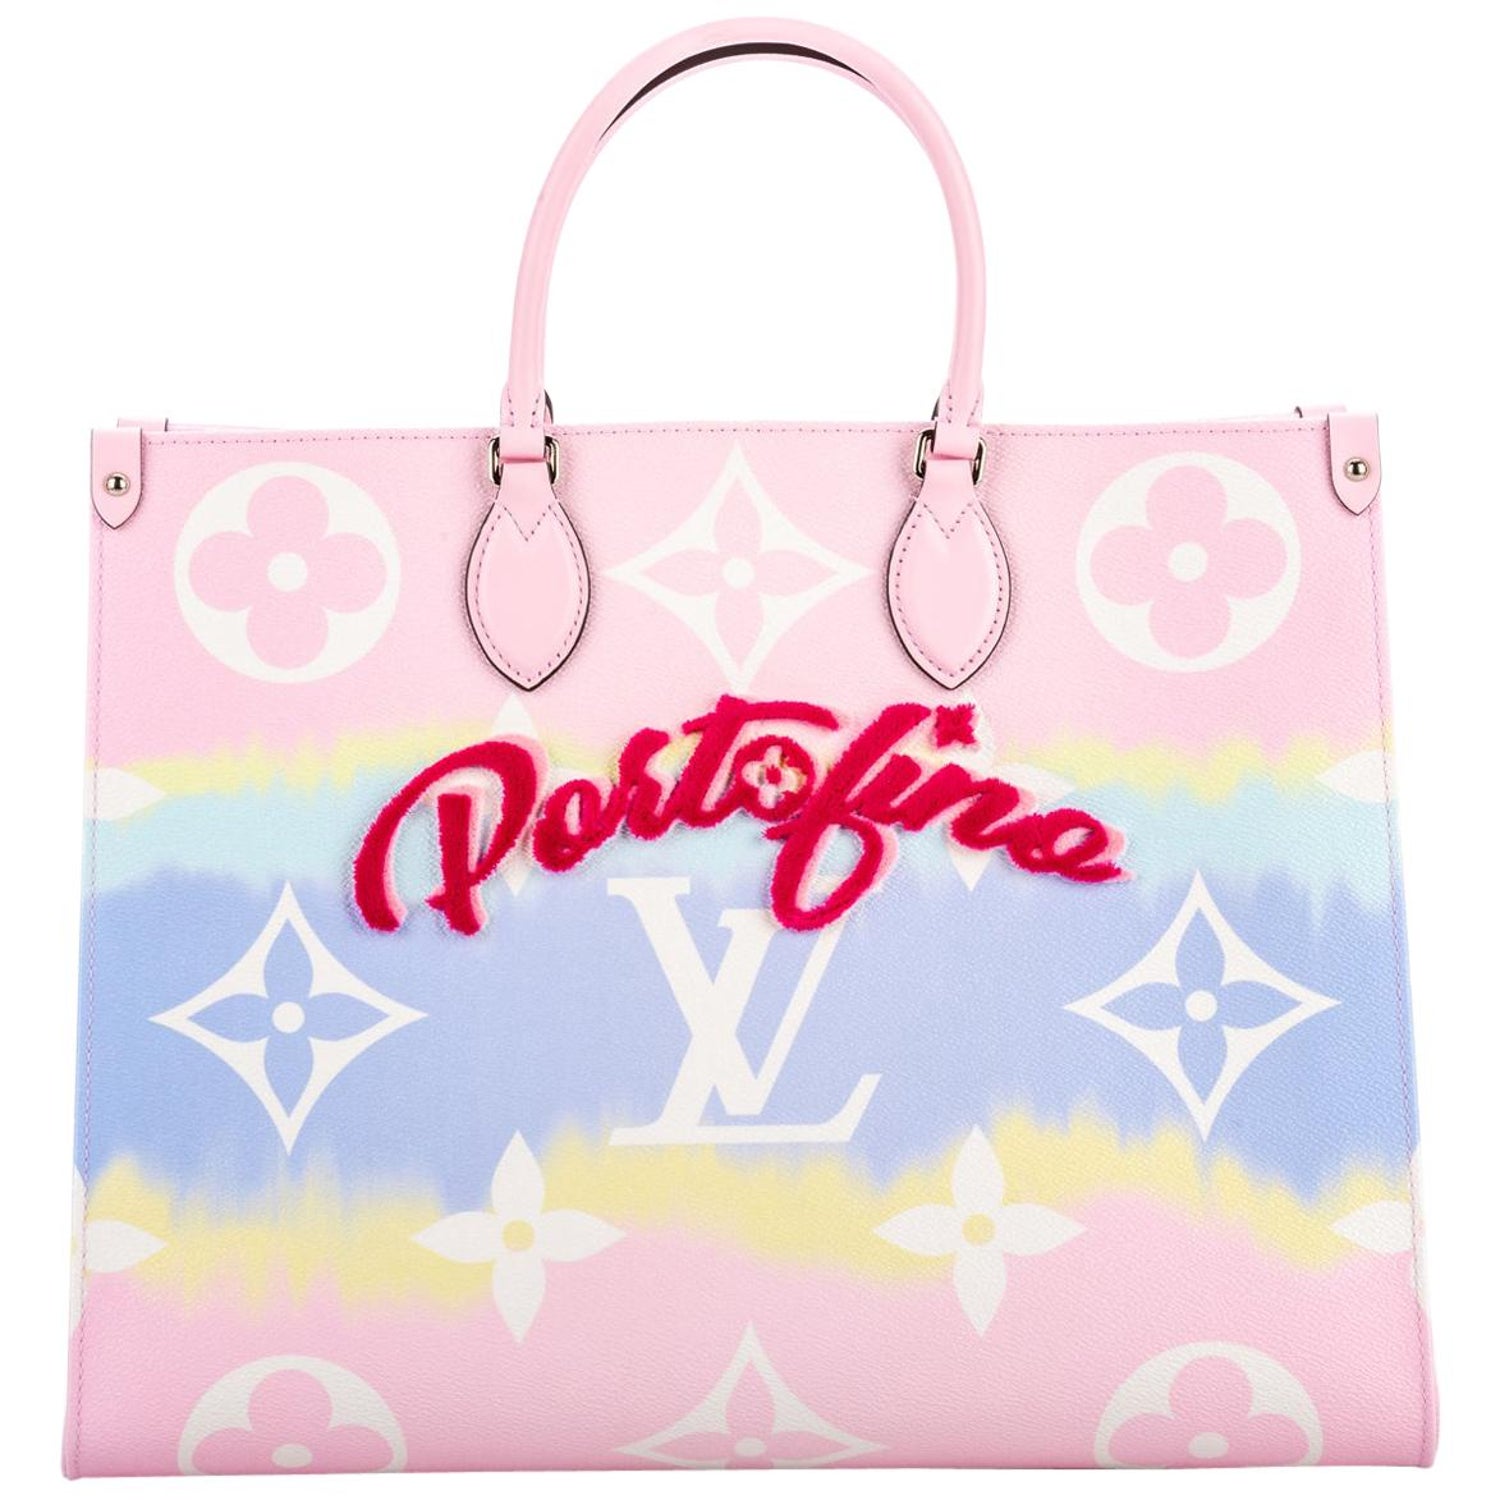 limited edition louis vuitton shopping bag